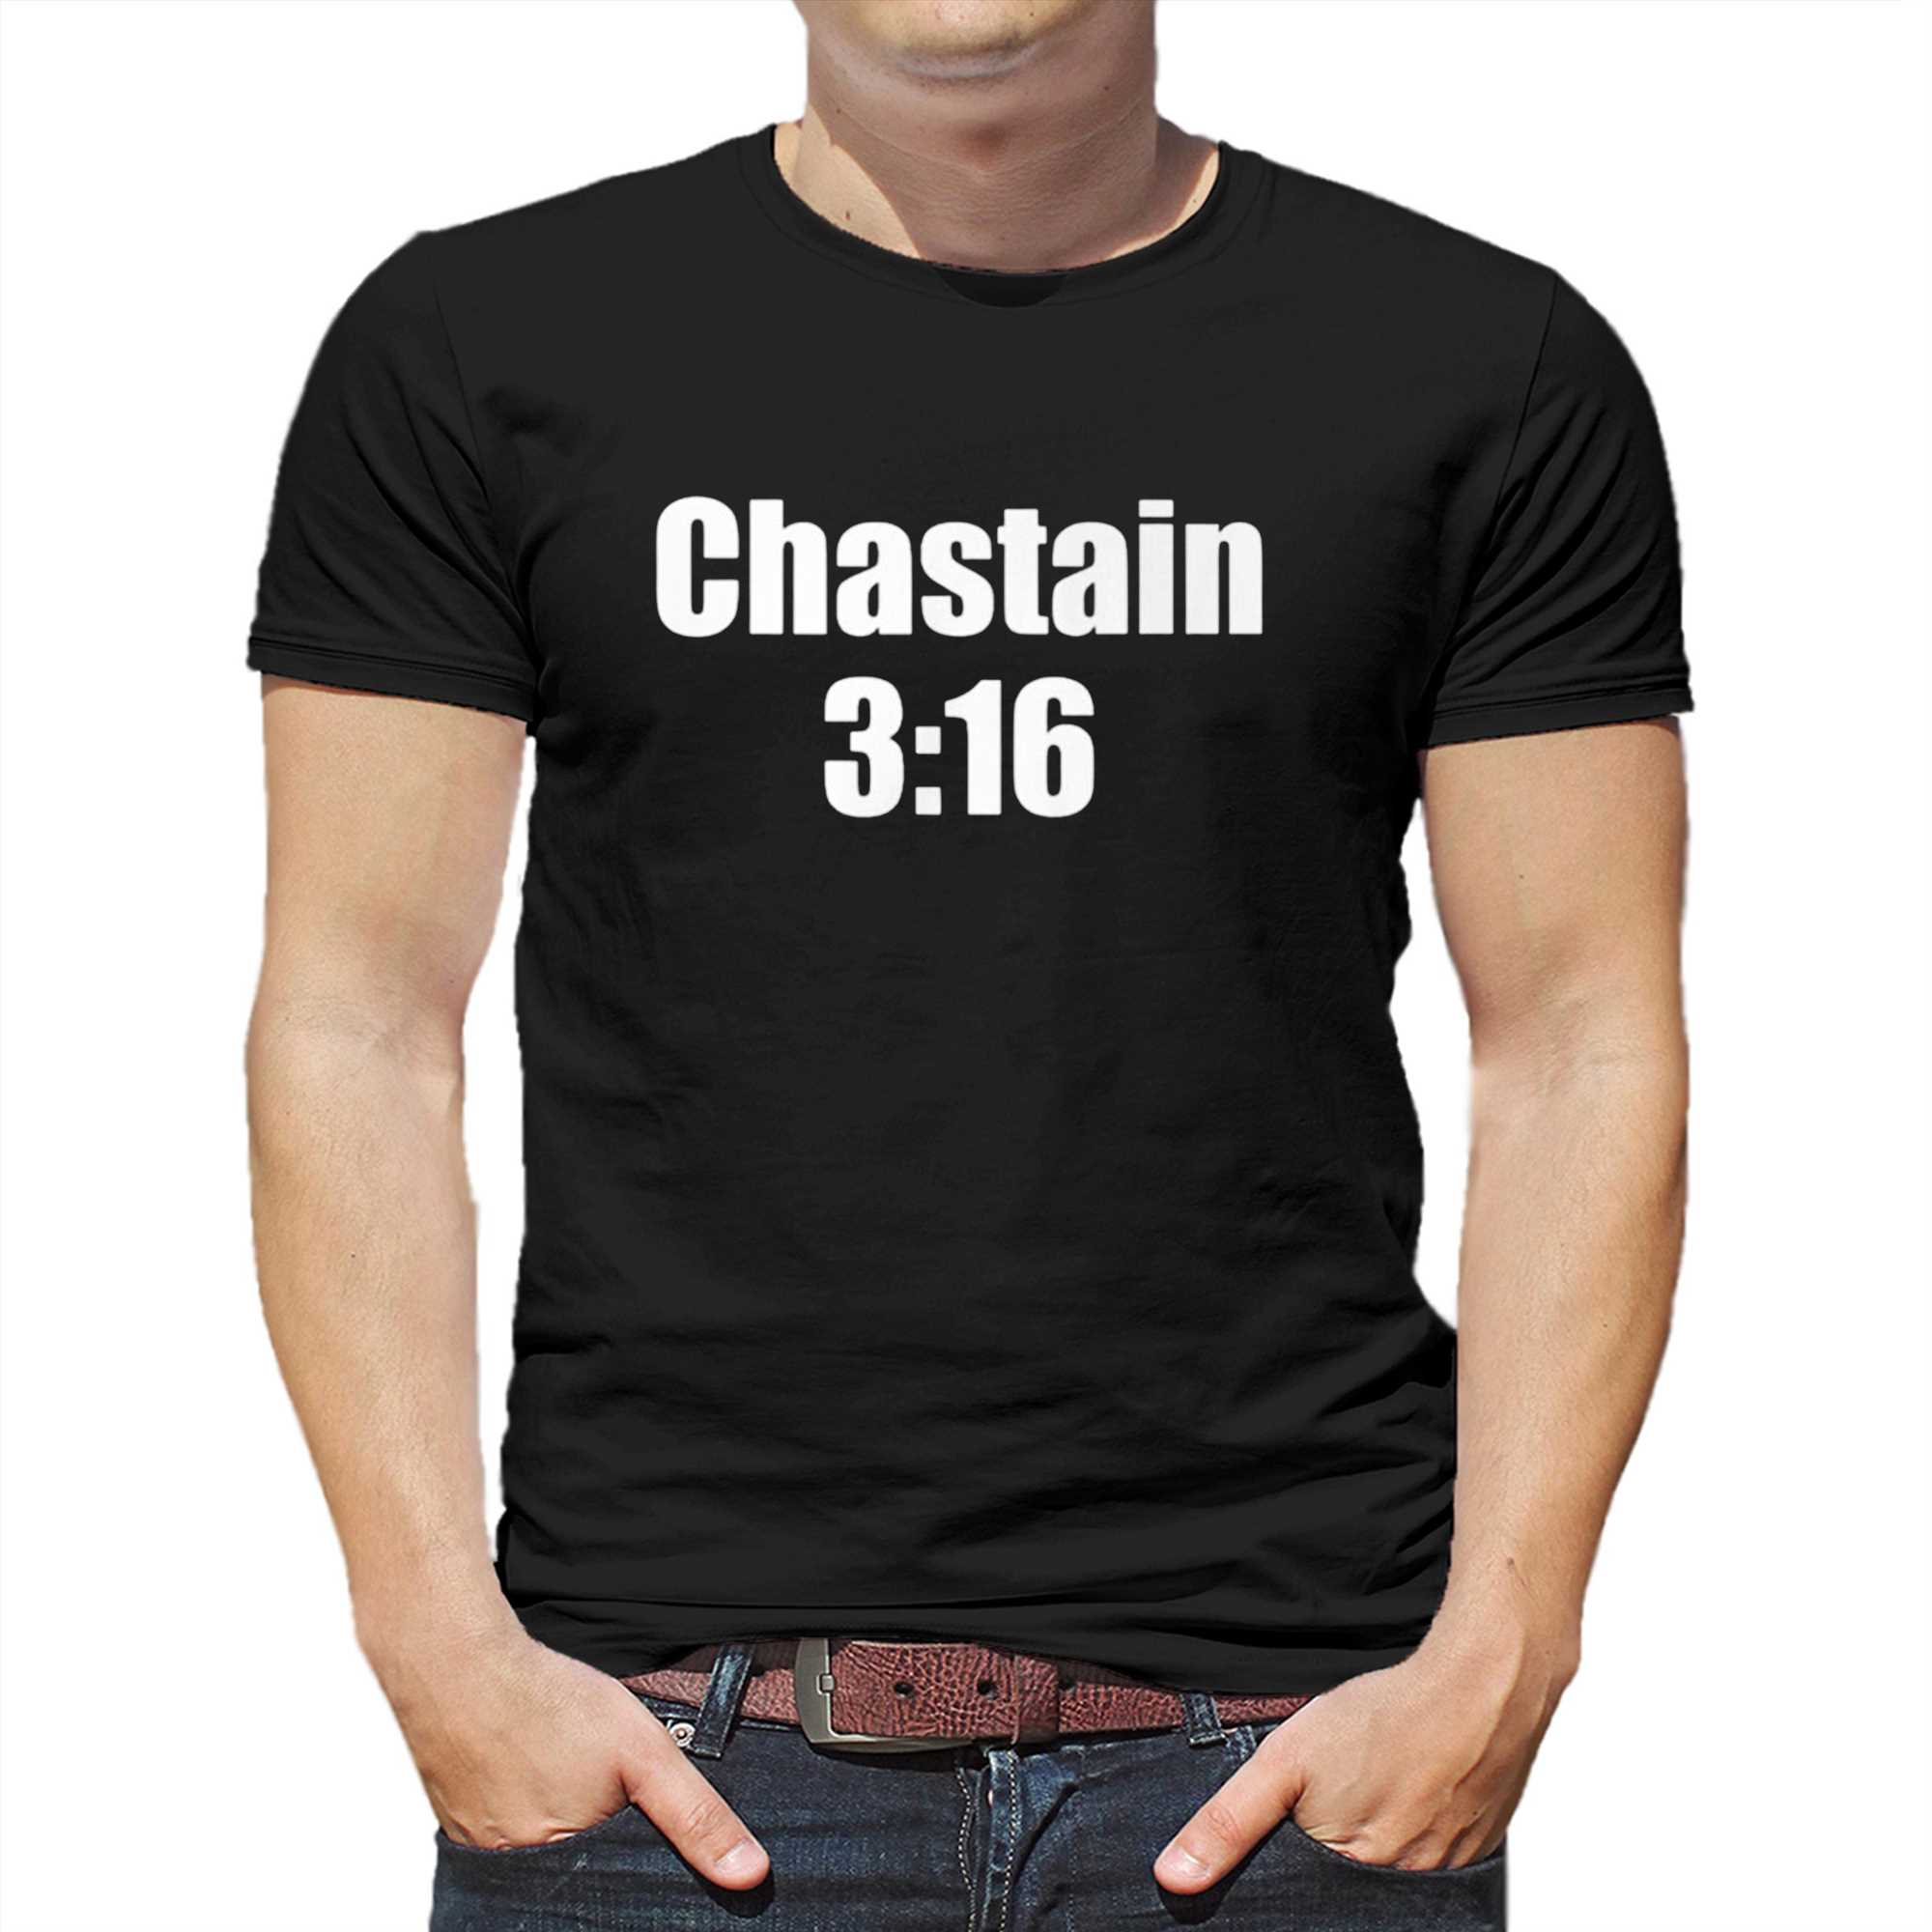 nascarcasm chastain 3 16 t shirt 1